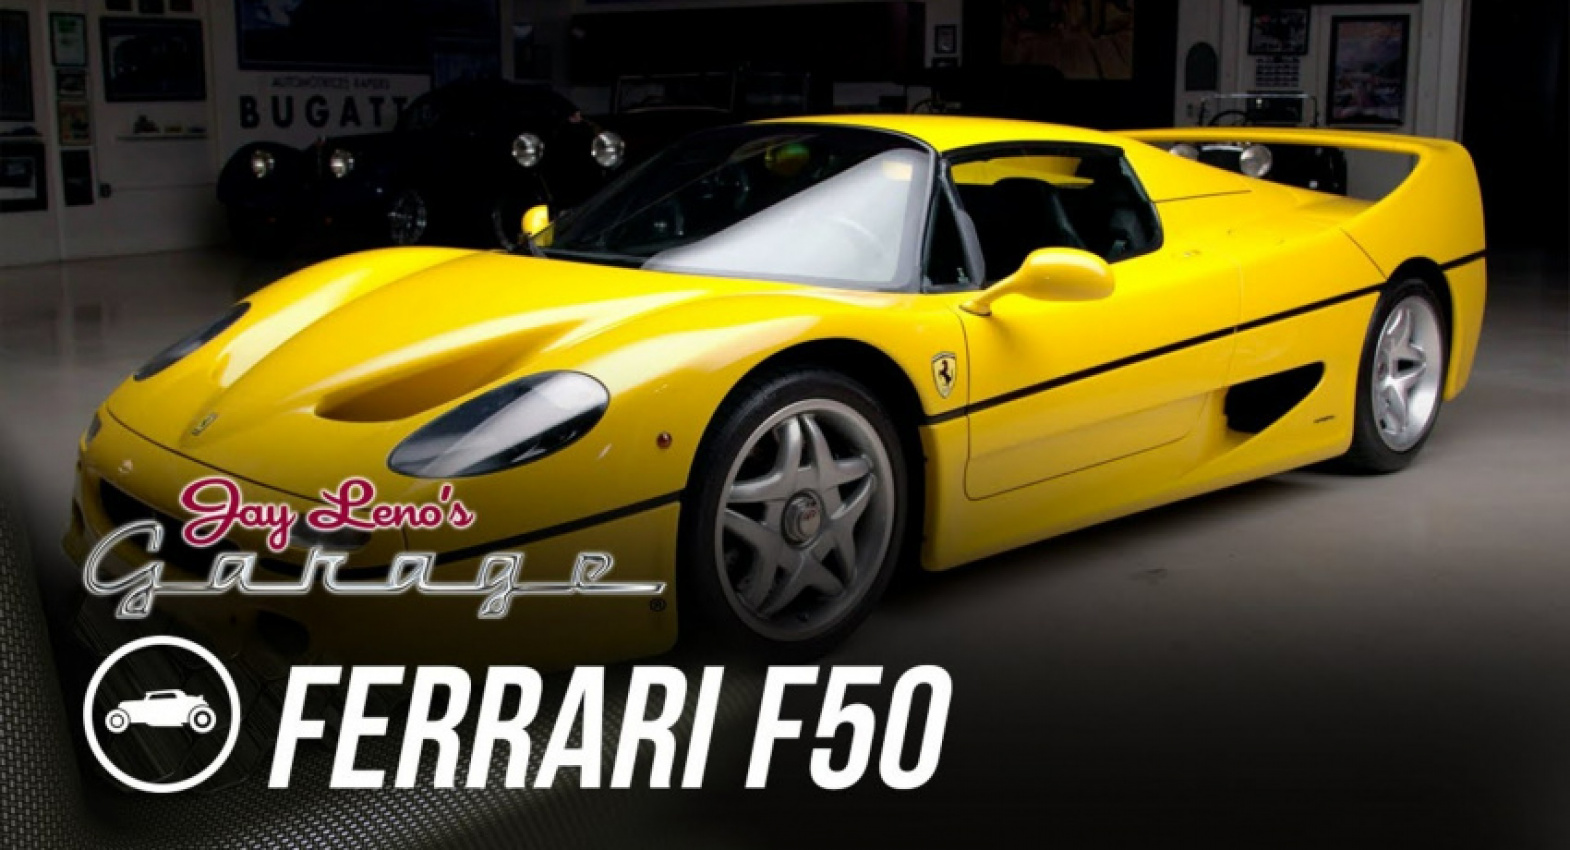 autos, cars, ferrari, news, classics, ferrari f50, ferrari videos, jay leno, supercar, video, jay leno finds the ferrari f50’s v12 comes alive near the redline